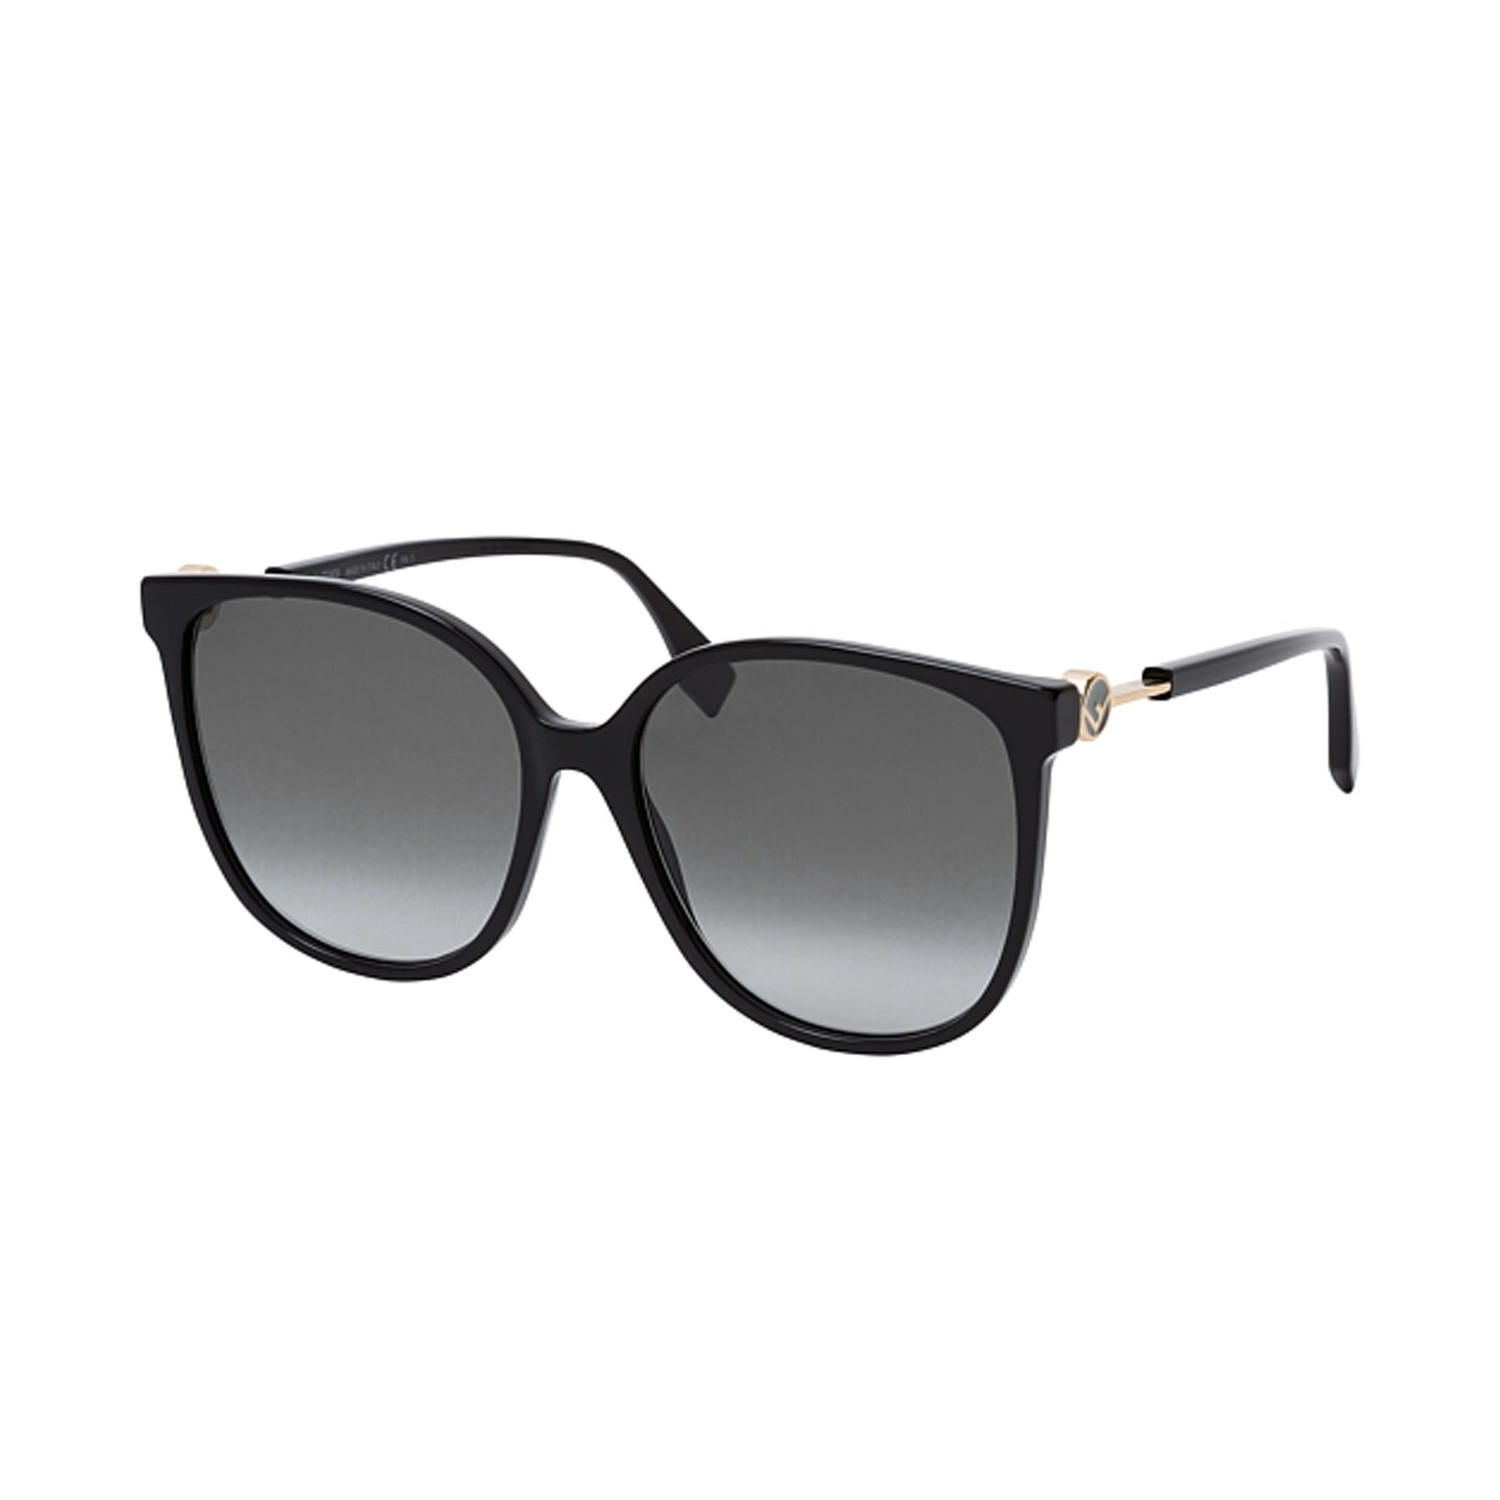 Women's Rectangular Sunglasses // Black + Gray Gradient - Luxury ...